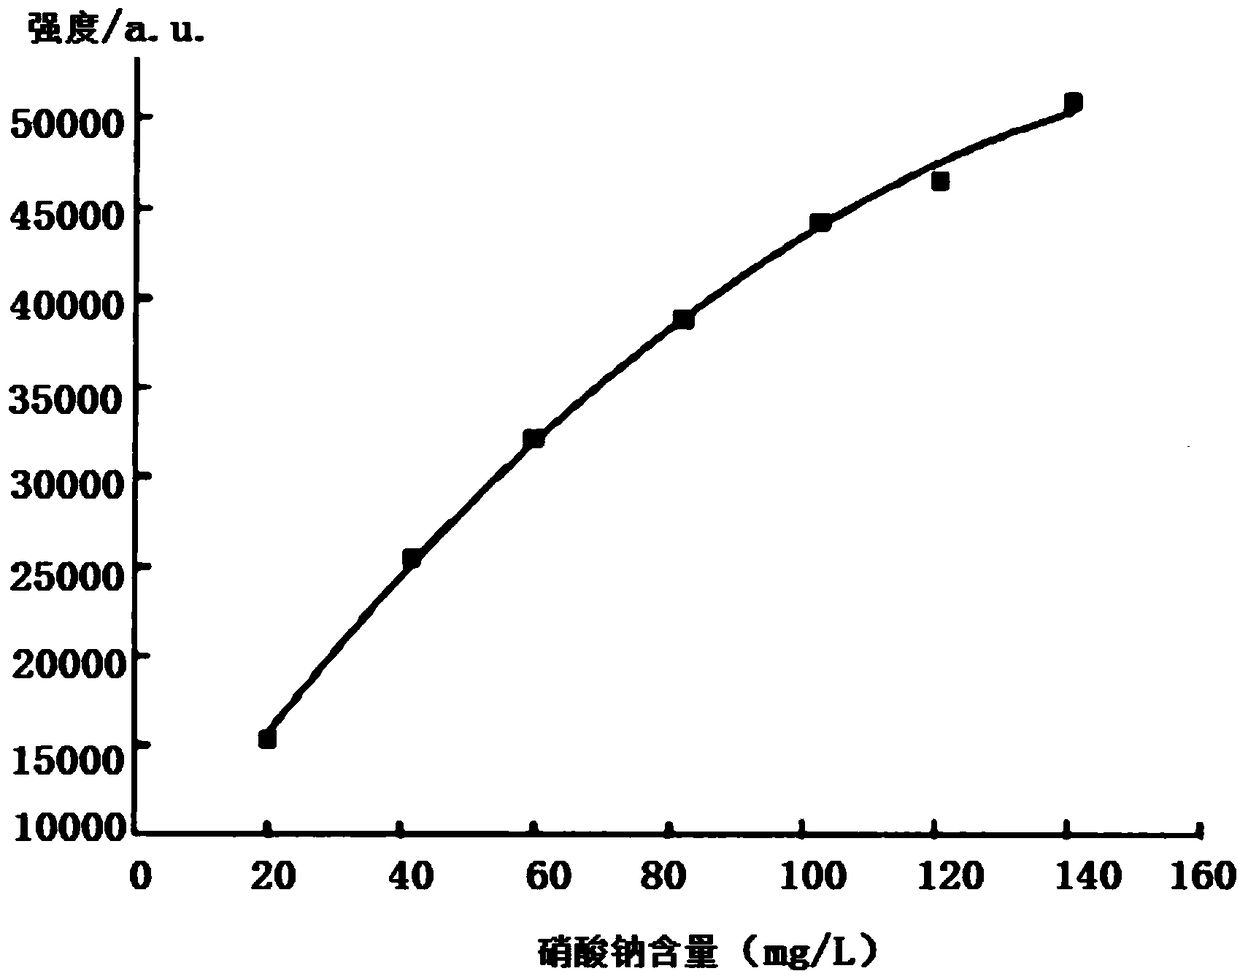 Alkaline Absorption-Raman Spectroscopy Method for Determination of Nitrogen Oxide Content in Air